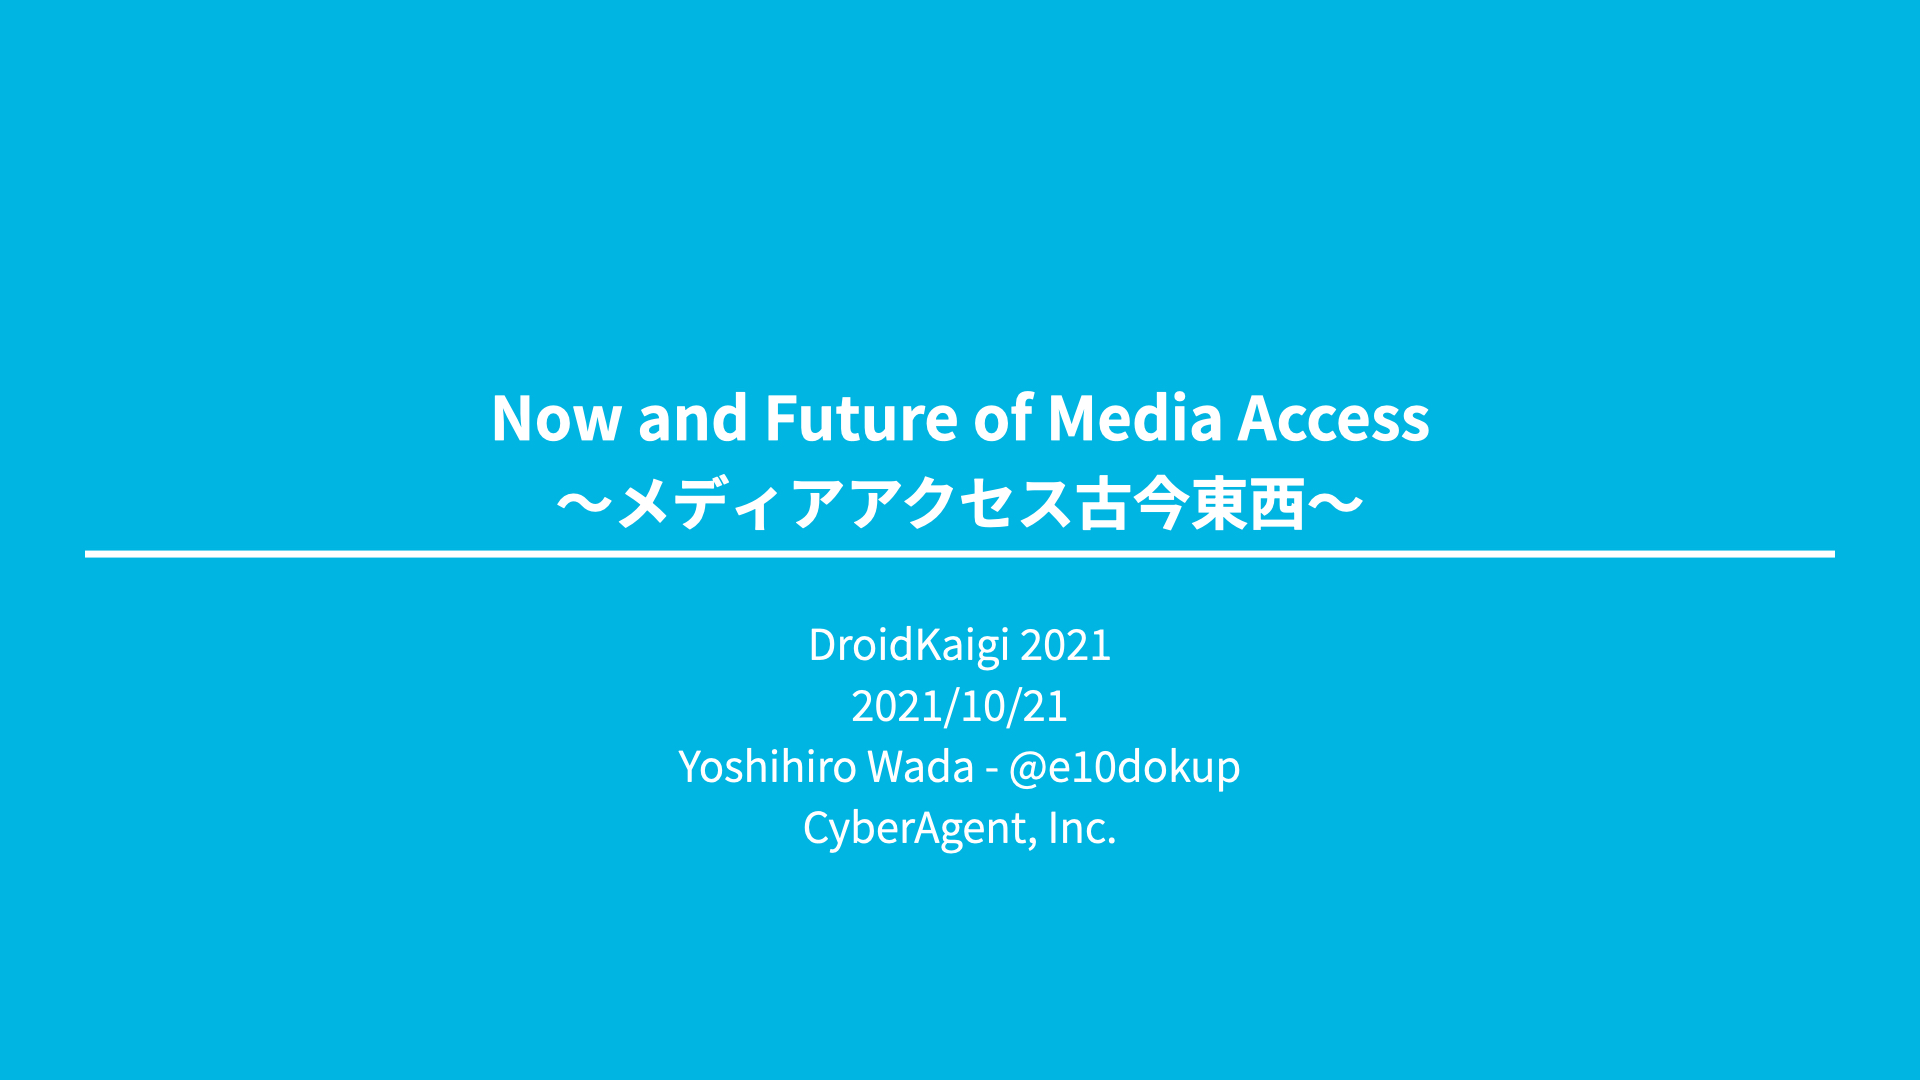 [DroidKaigi 2021登壇書き起こし] Now and Future of Media Access / メディアアクセス古今東西